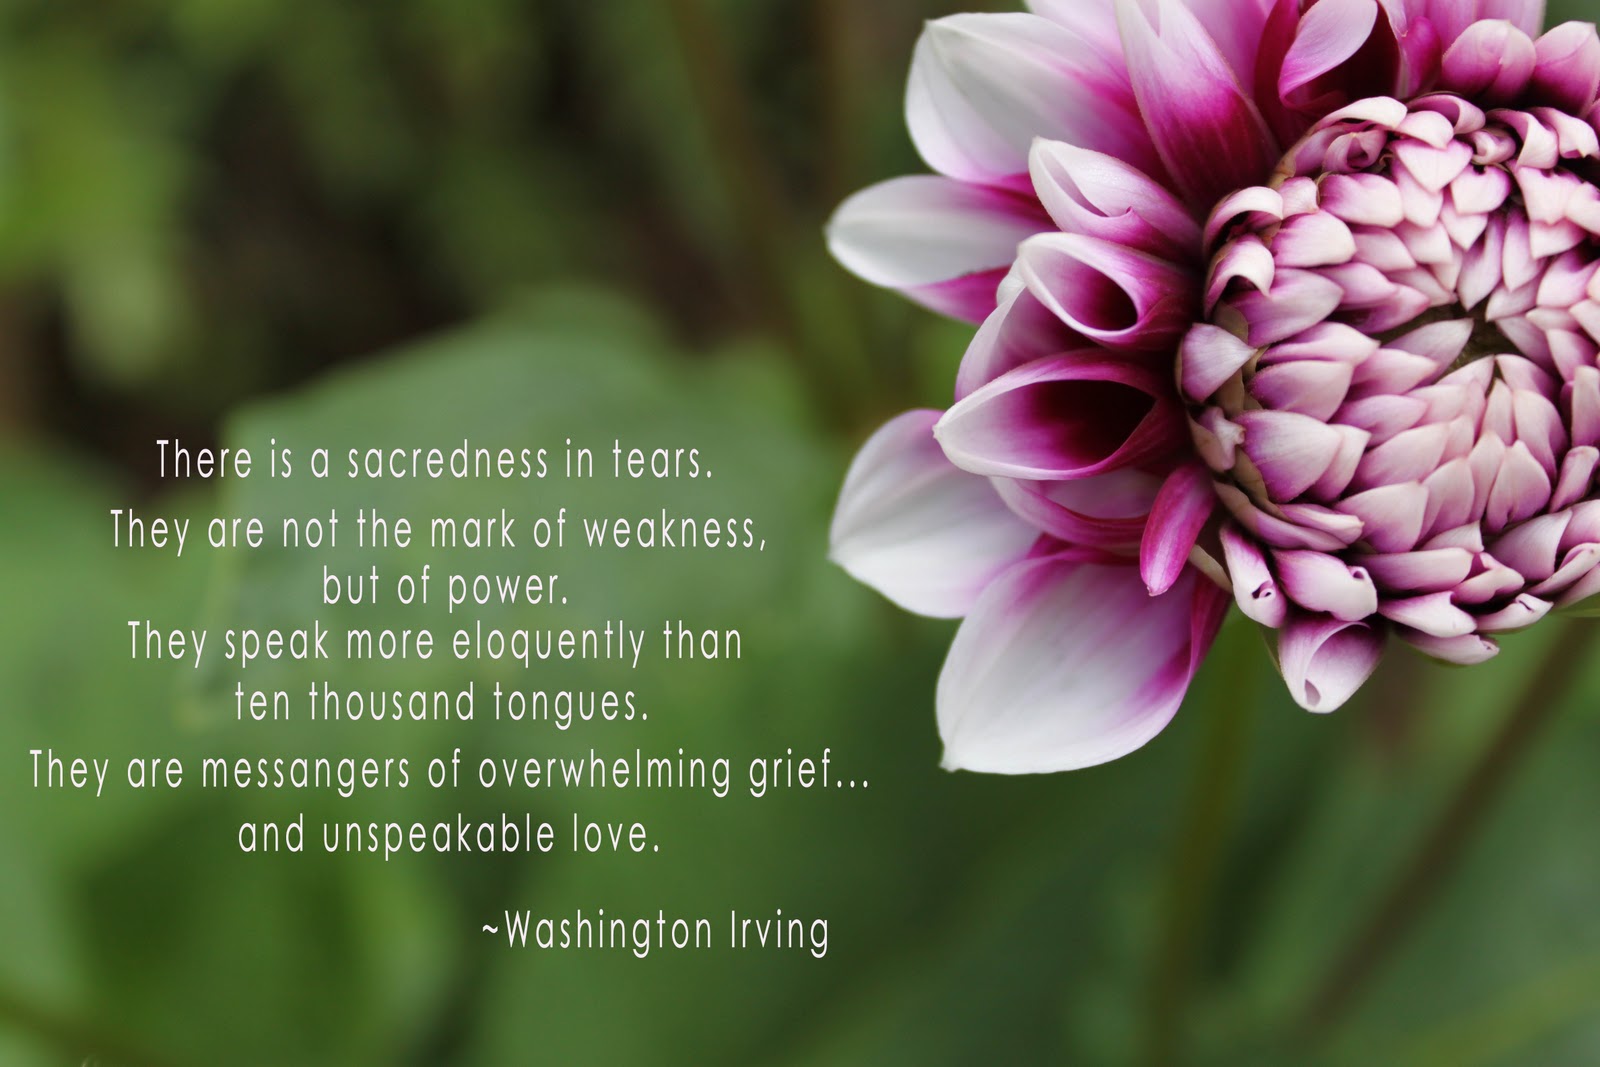 Washington Irving's quote #1